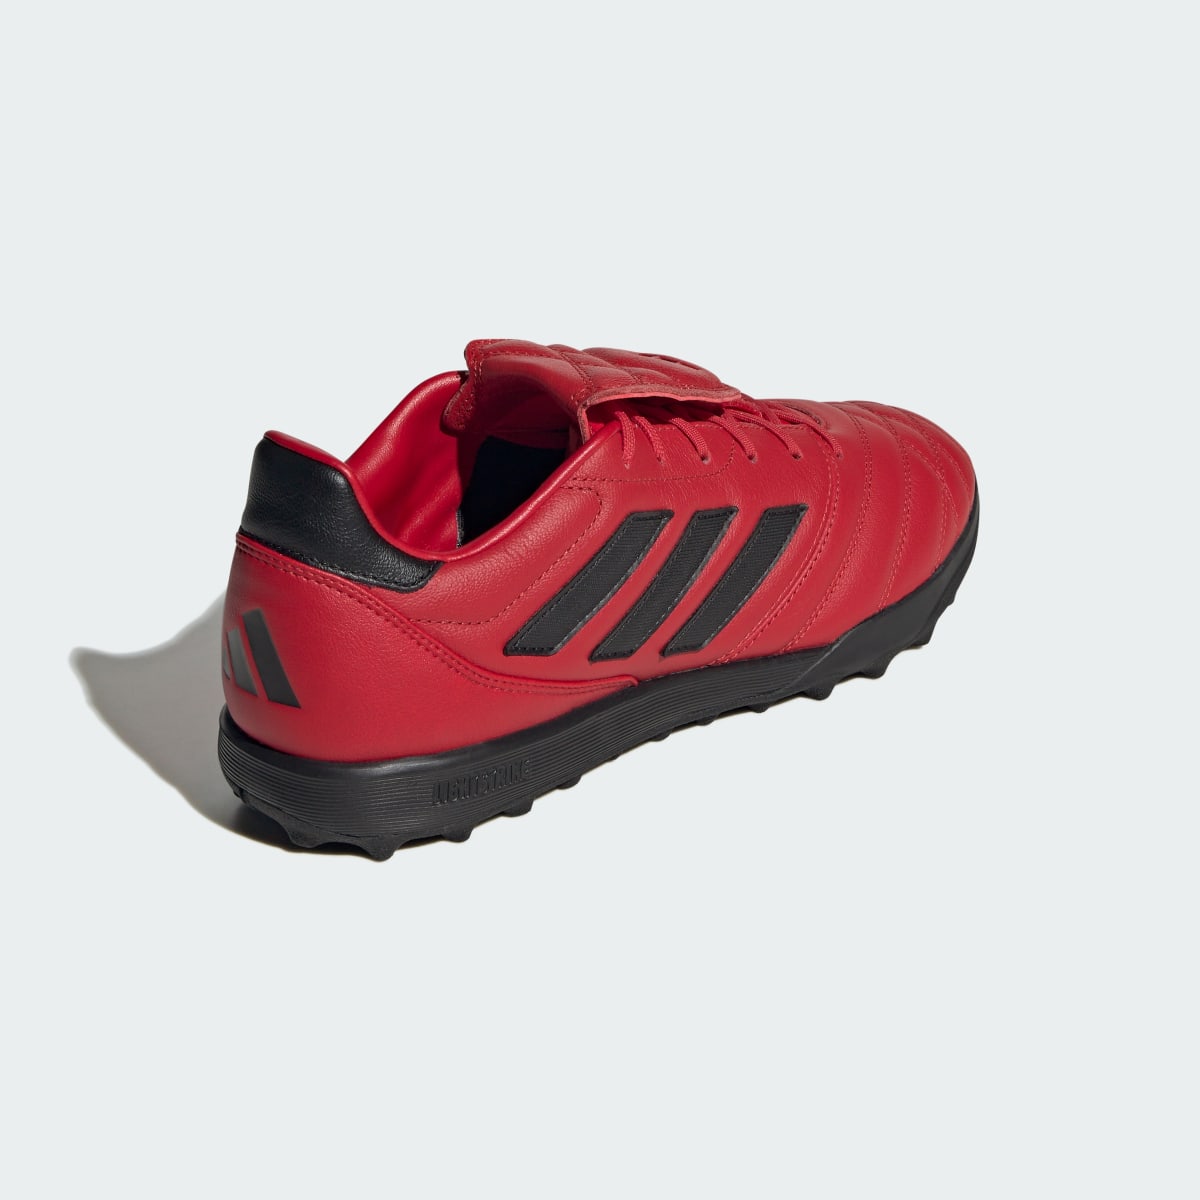 Adidas Copa Gloro Turf Boots. 6